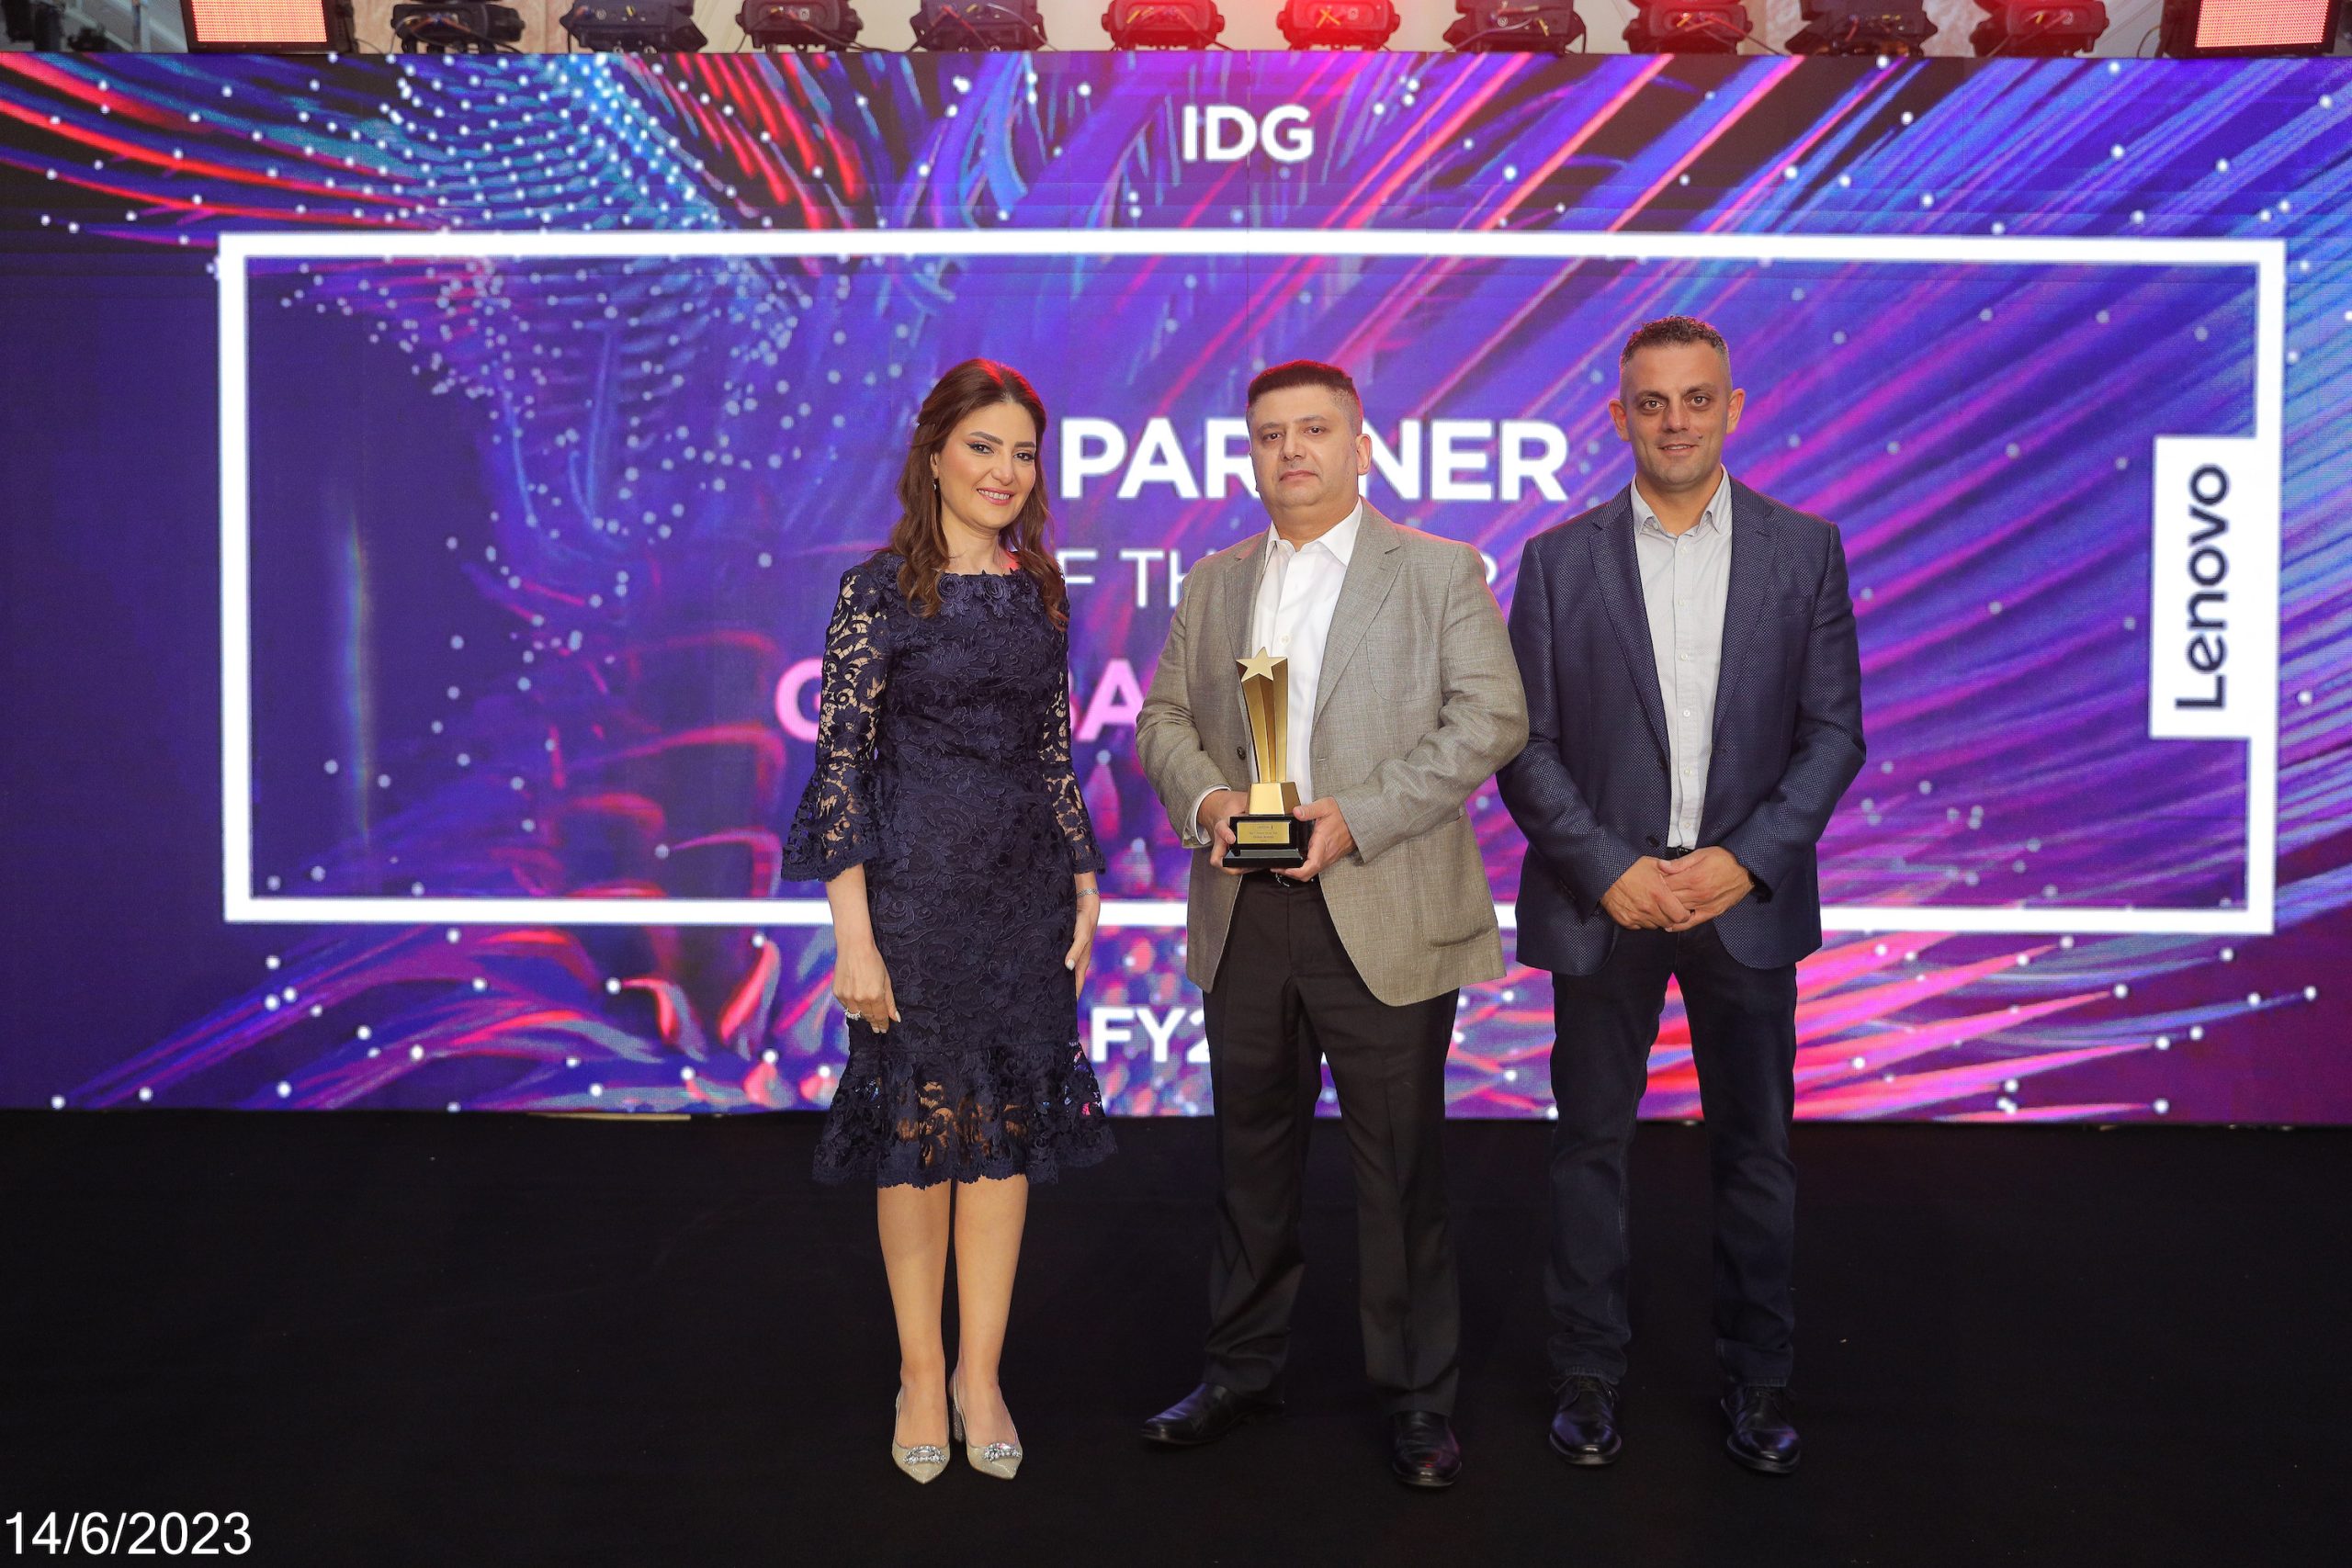 GBG Wins IDG T1 Partner of the Year Award from Lenovo